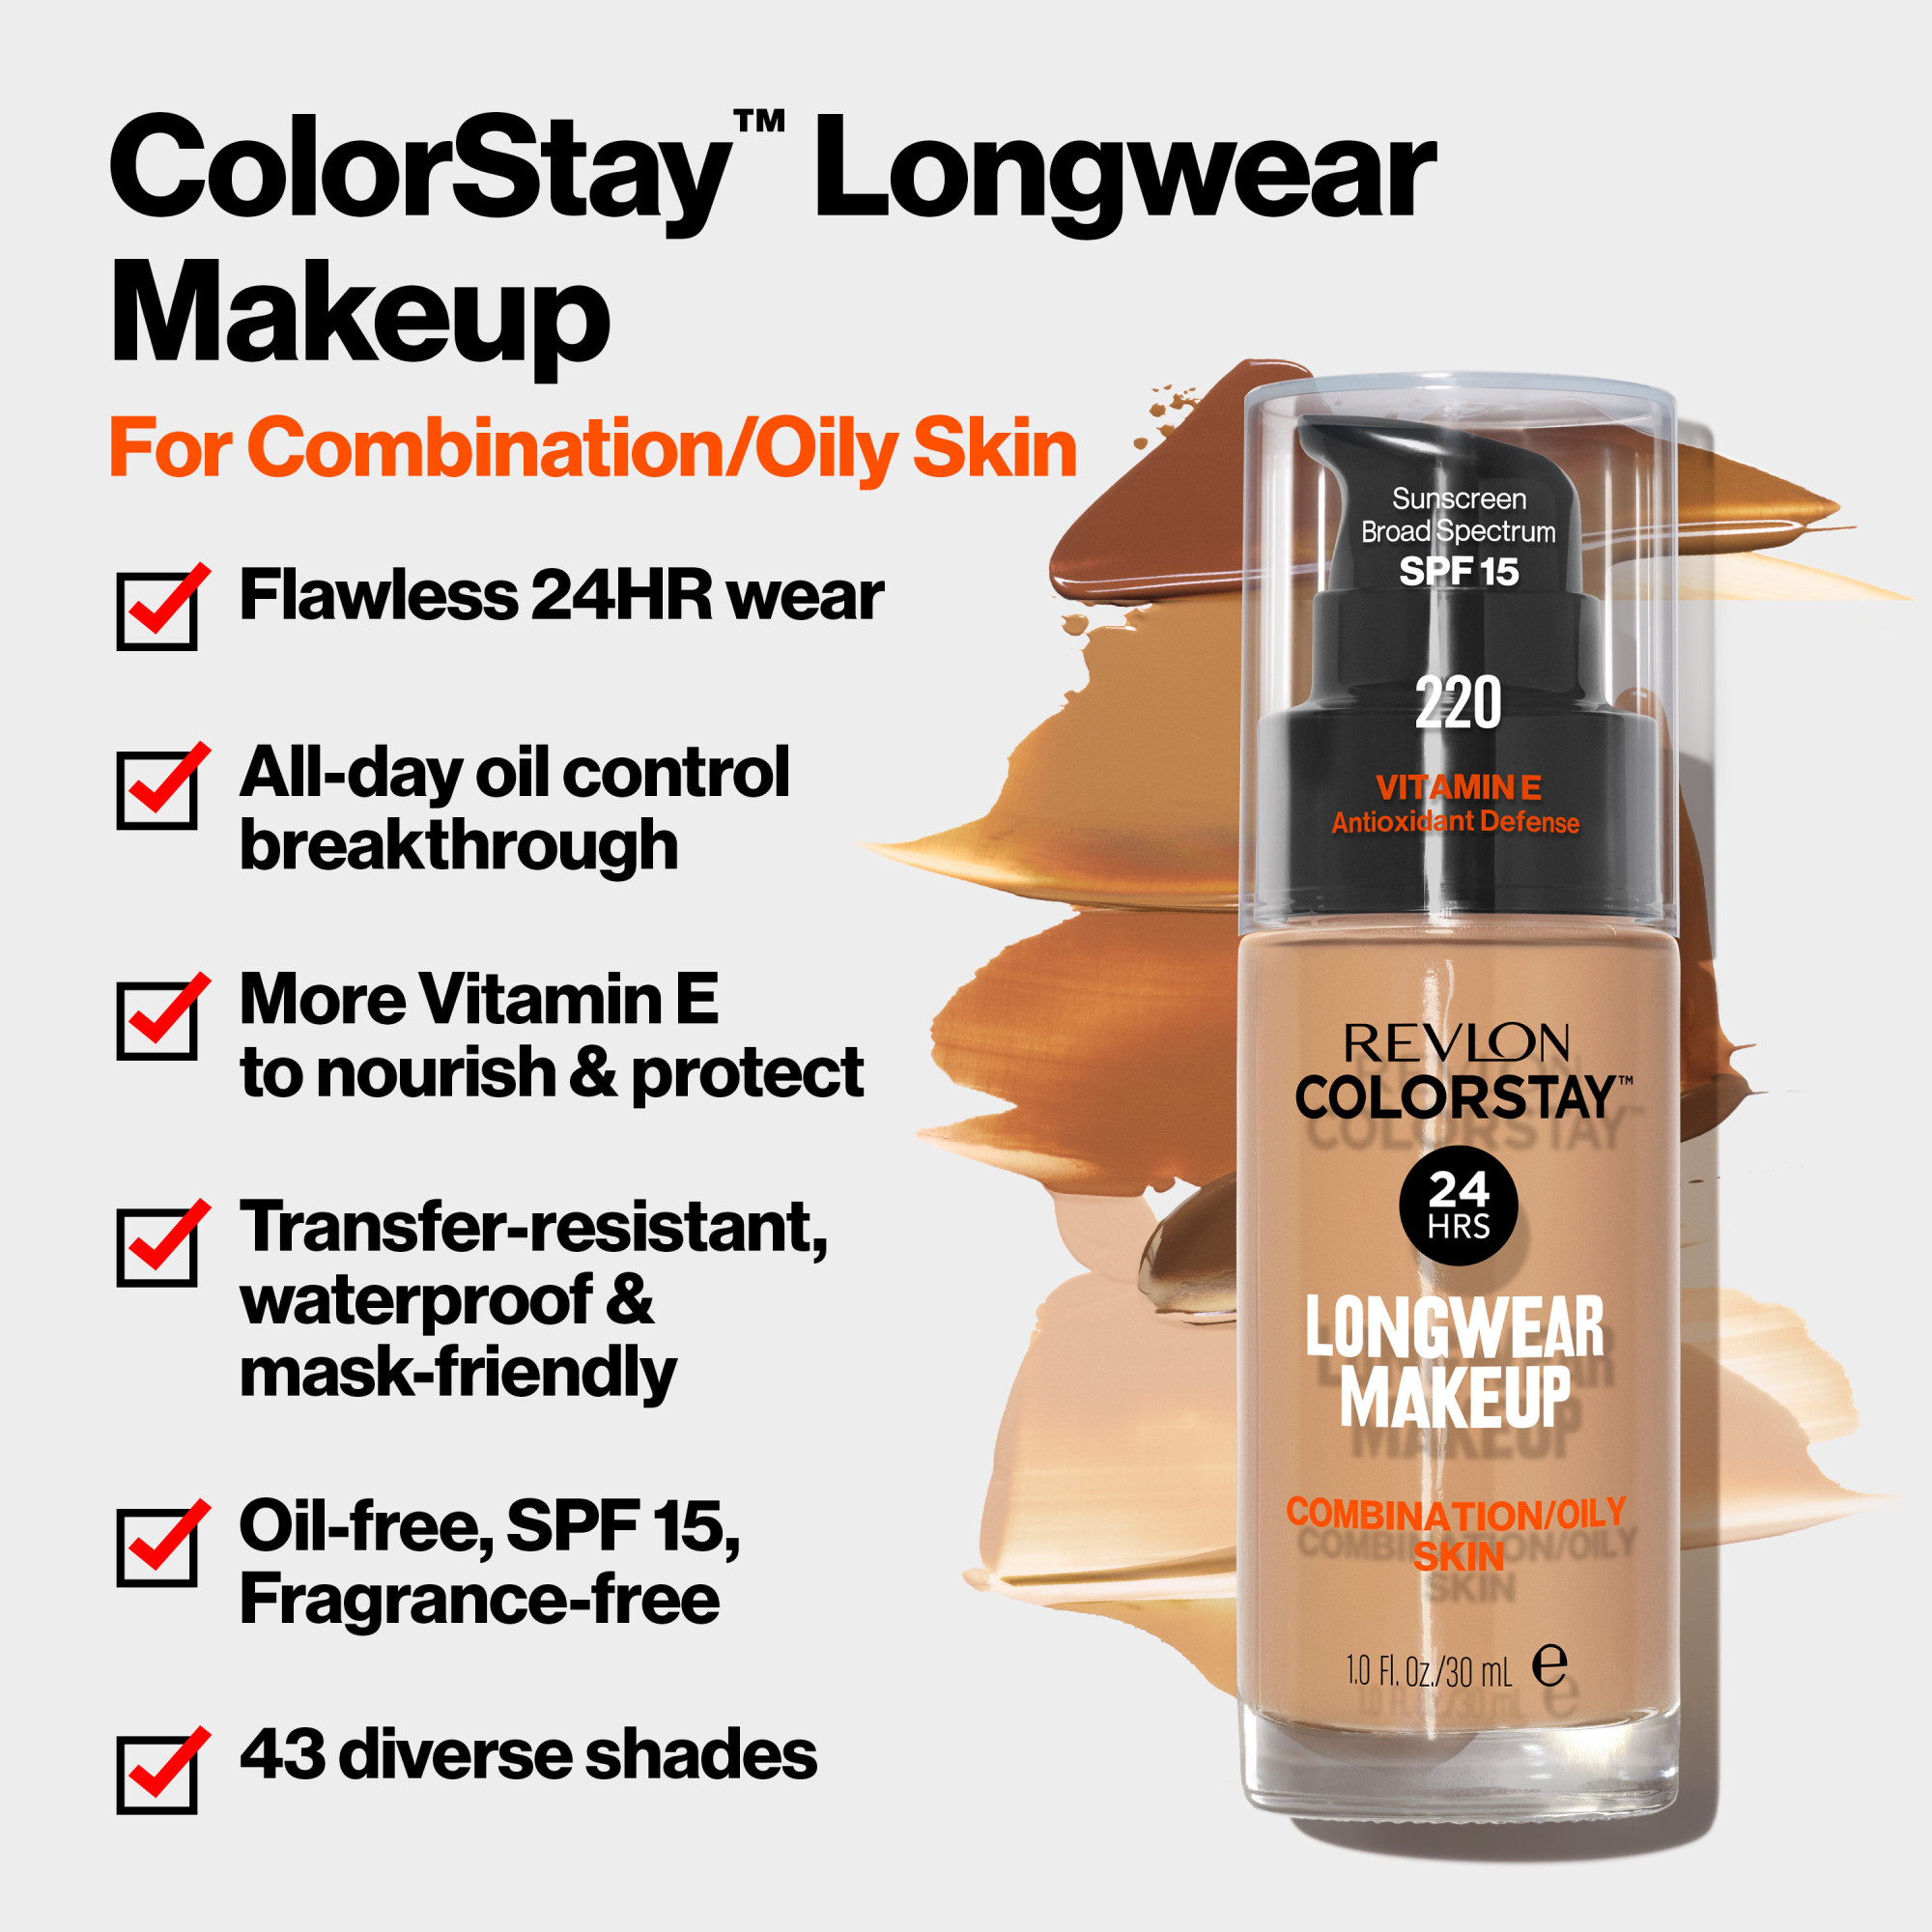 Revlon ColorStay Liquid Foundation Makeup, Matte Finish, Combination/Oily Skin, SPF 15, 150 Buff, 1 fl oz. - image 5 of 11